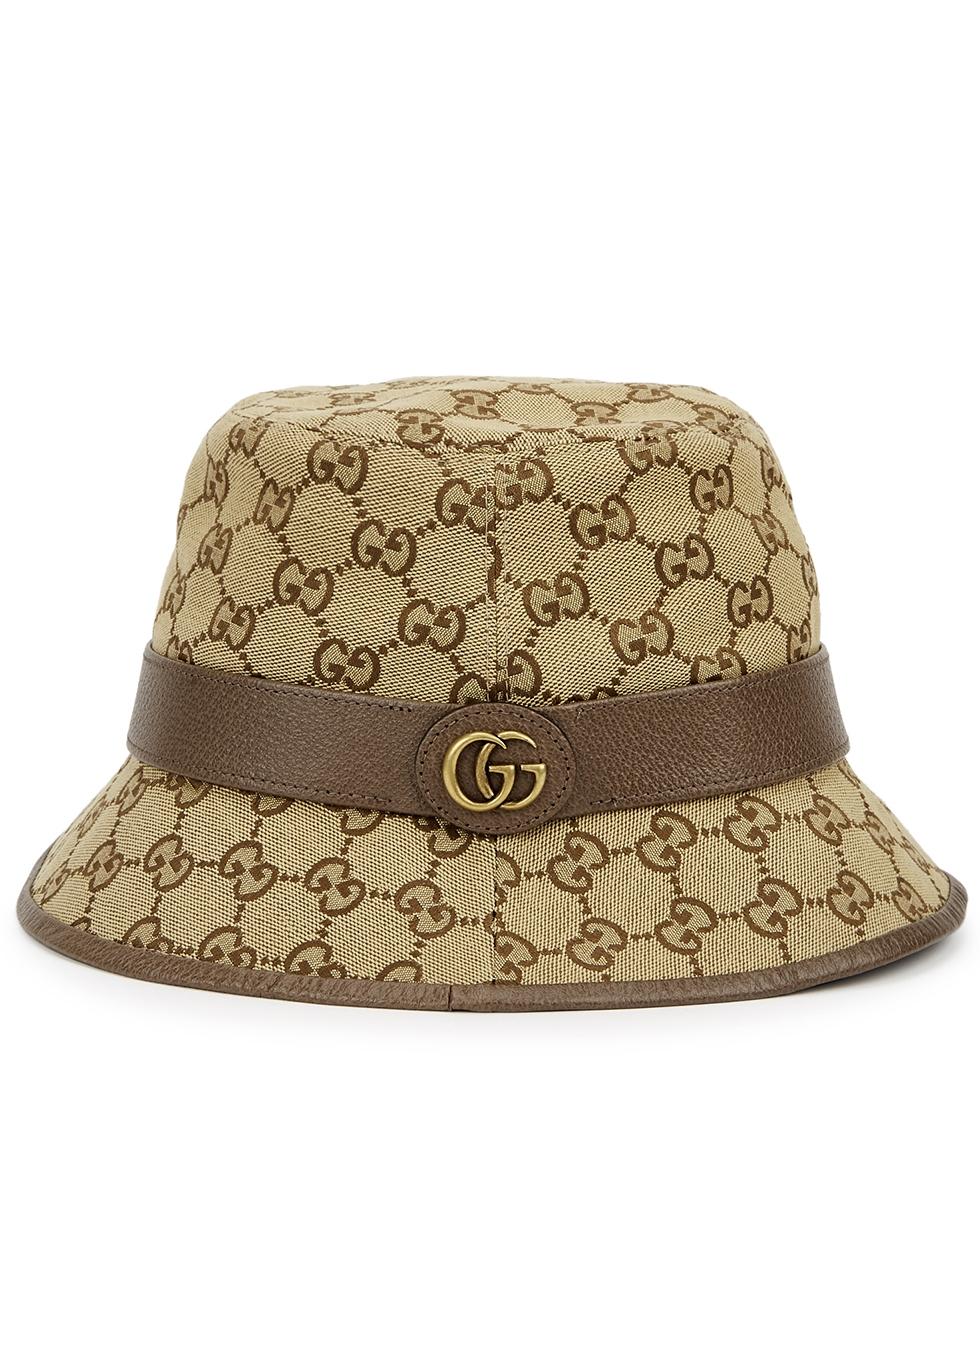 Gucci GG Monogrammed Canvas Bucket Hat in Beige (Natural) for Men - Lyst